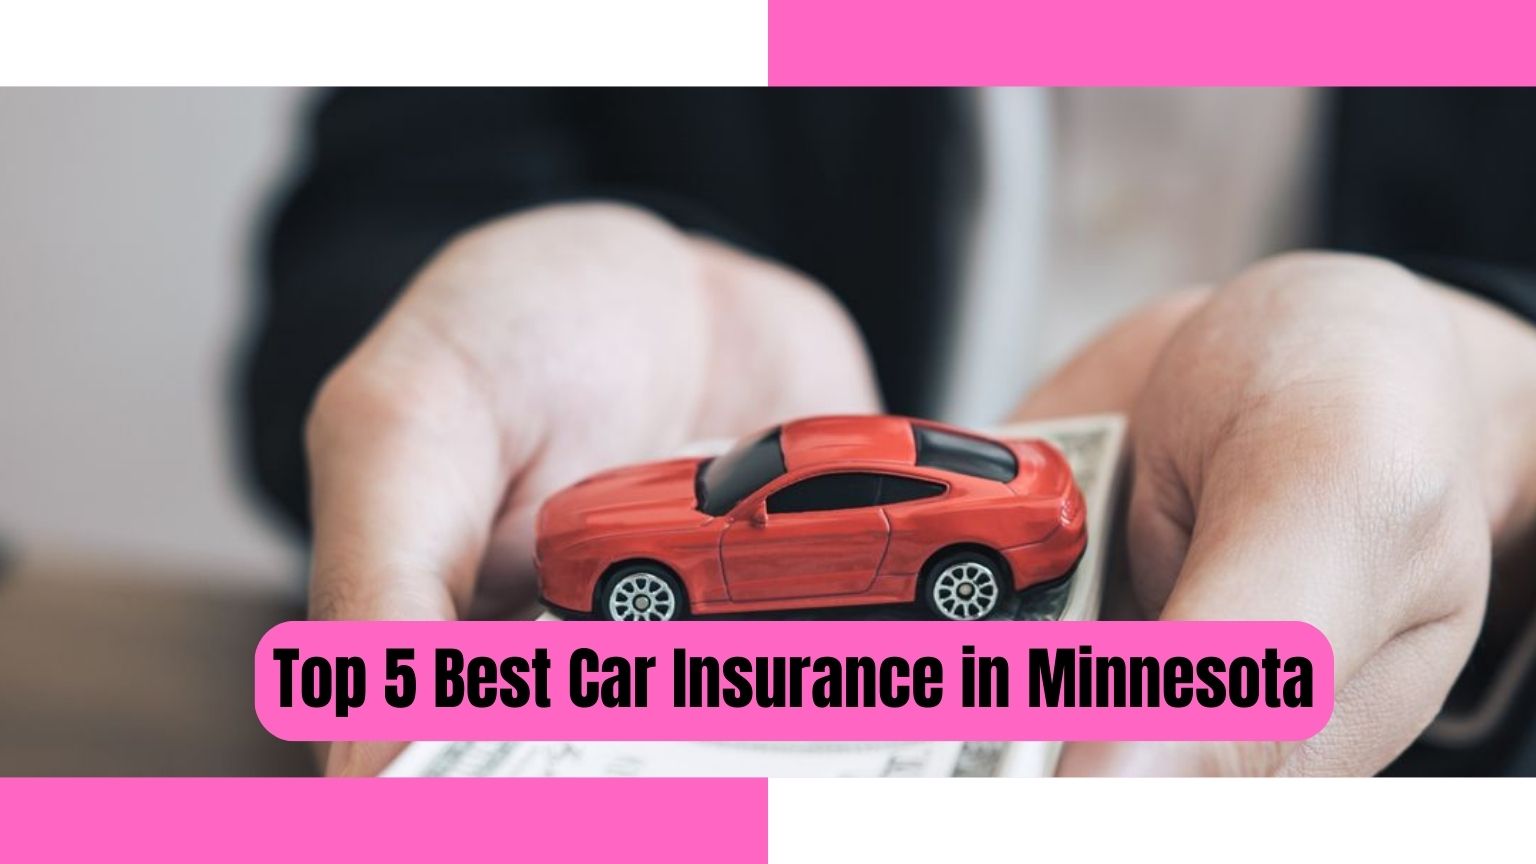 Top 5 Best Car Insurance in Minnesota